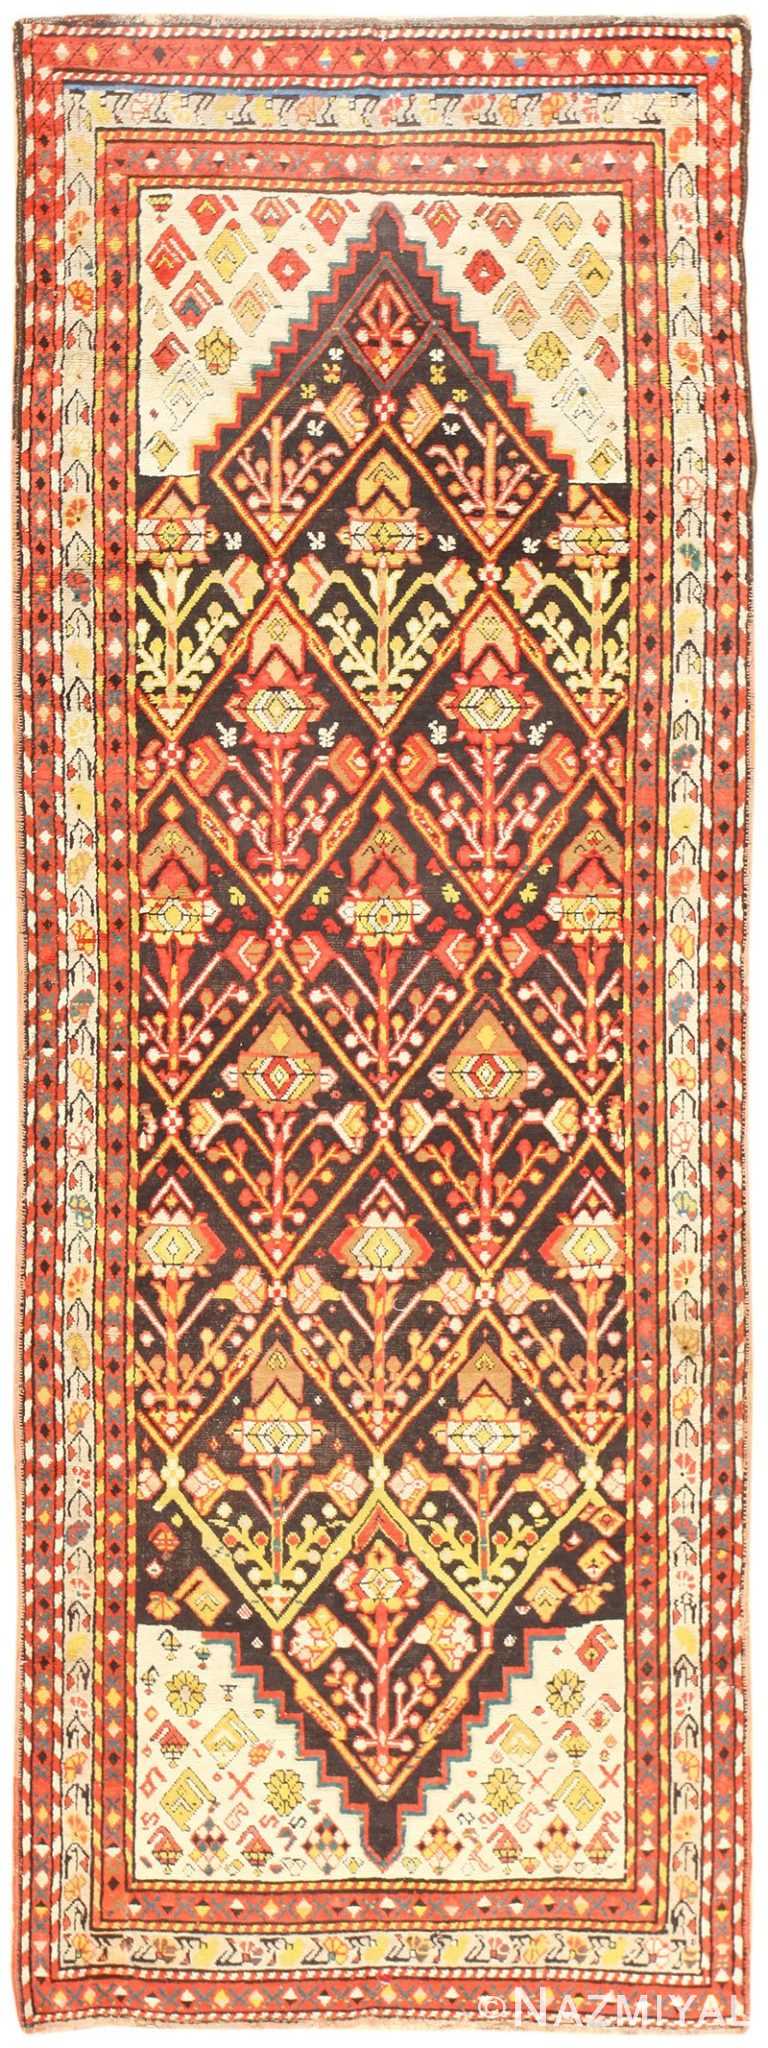 Antique Rare Caucasian Shrub Design Kazak Runner Rug #50424 by Nazmiyal Antique Rugs